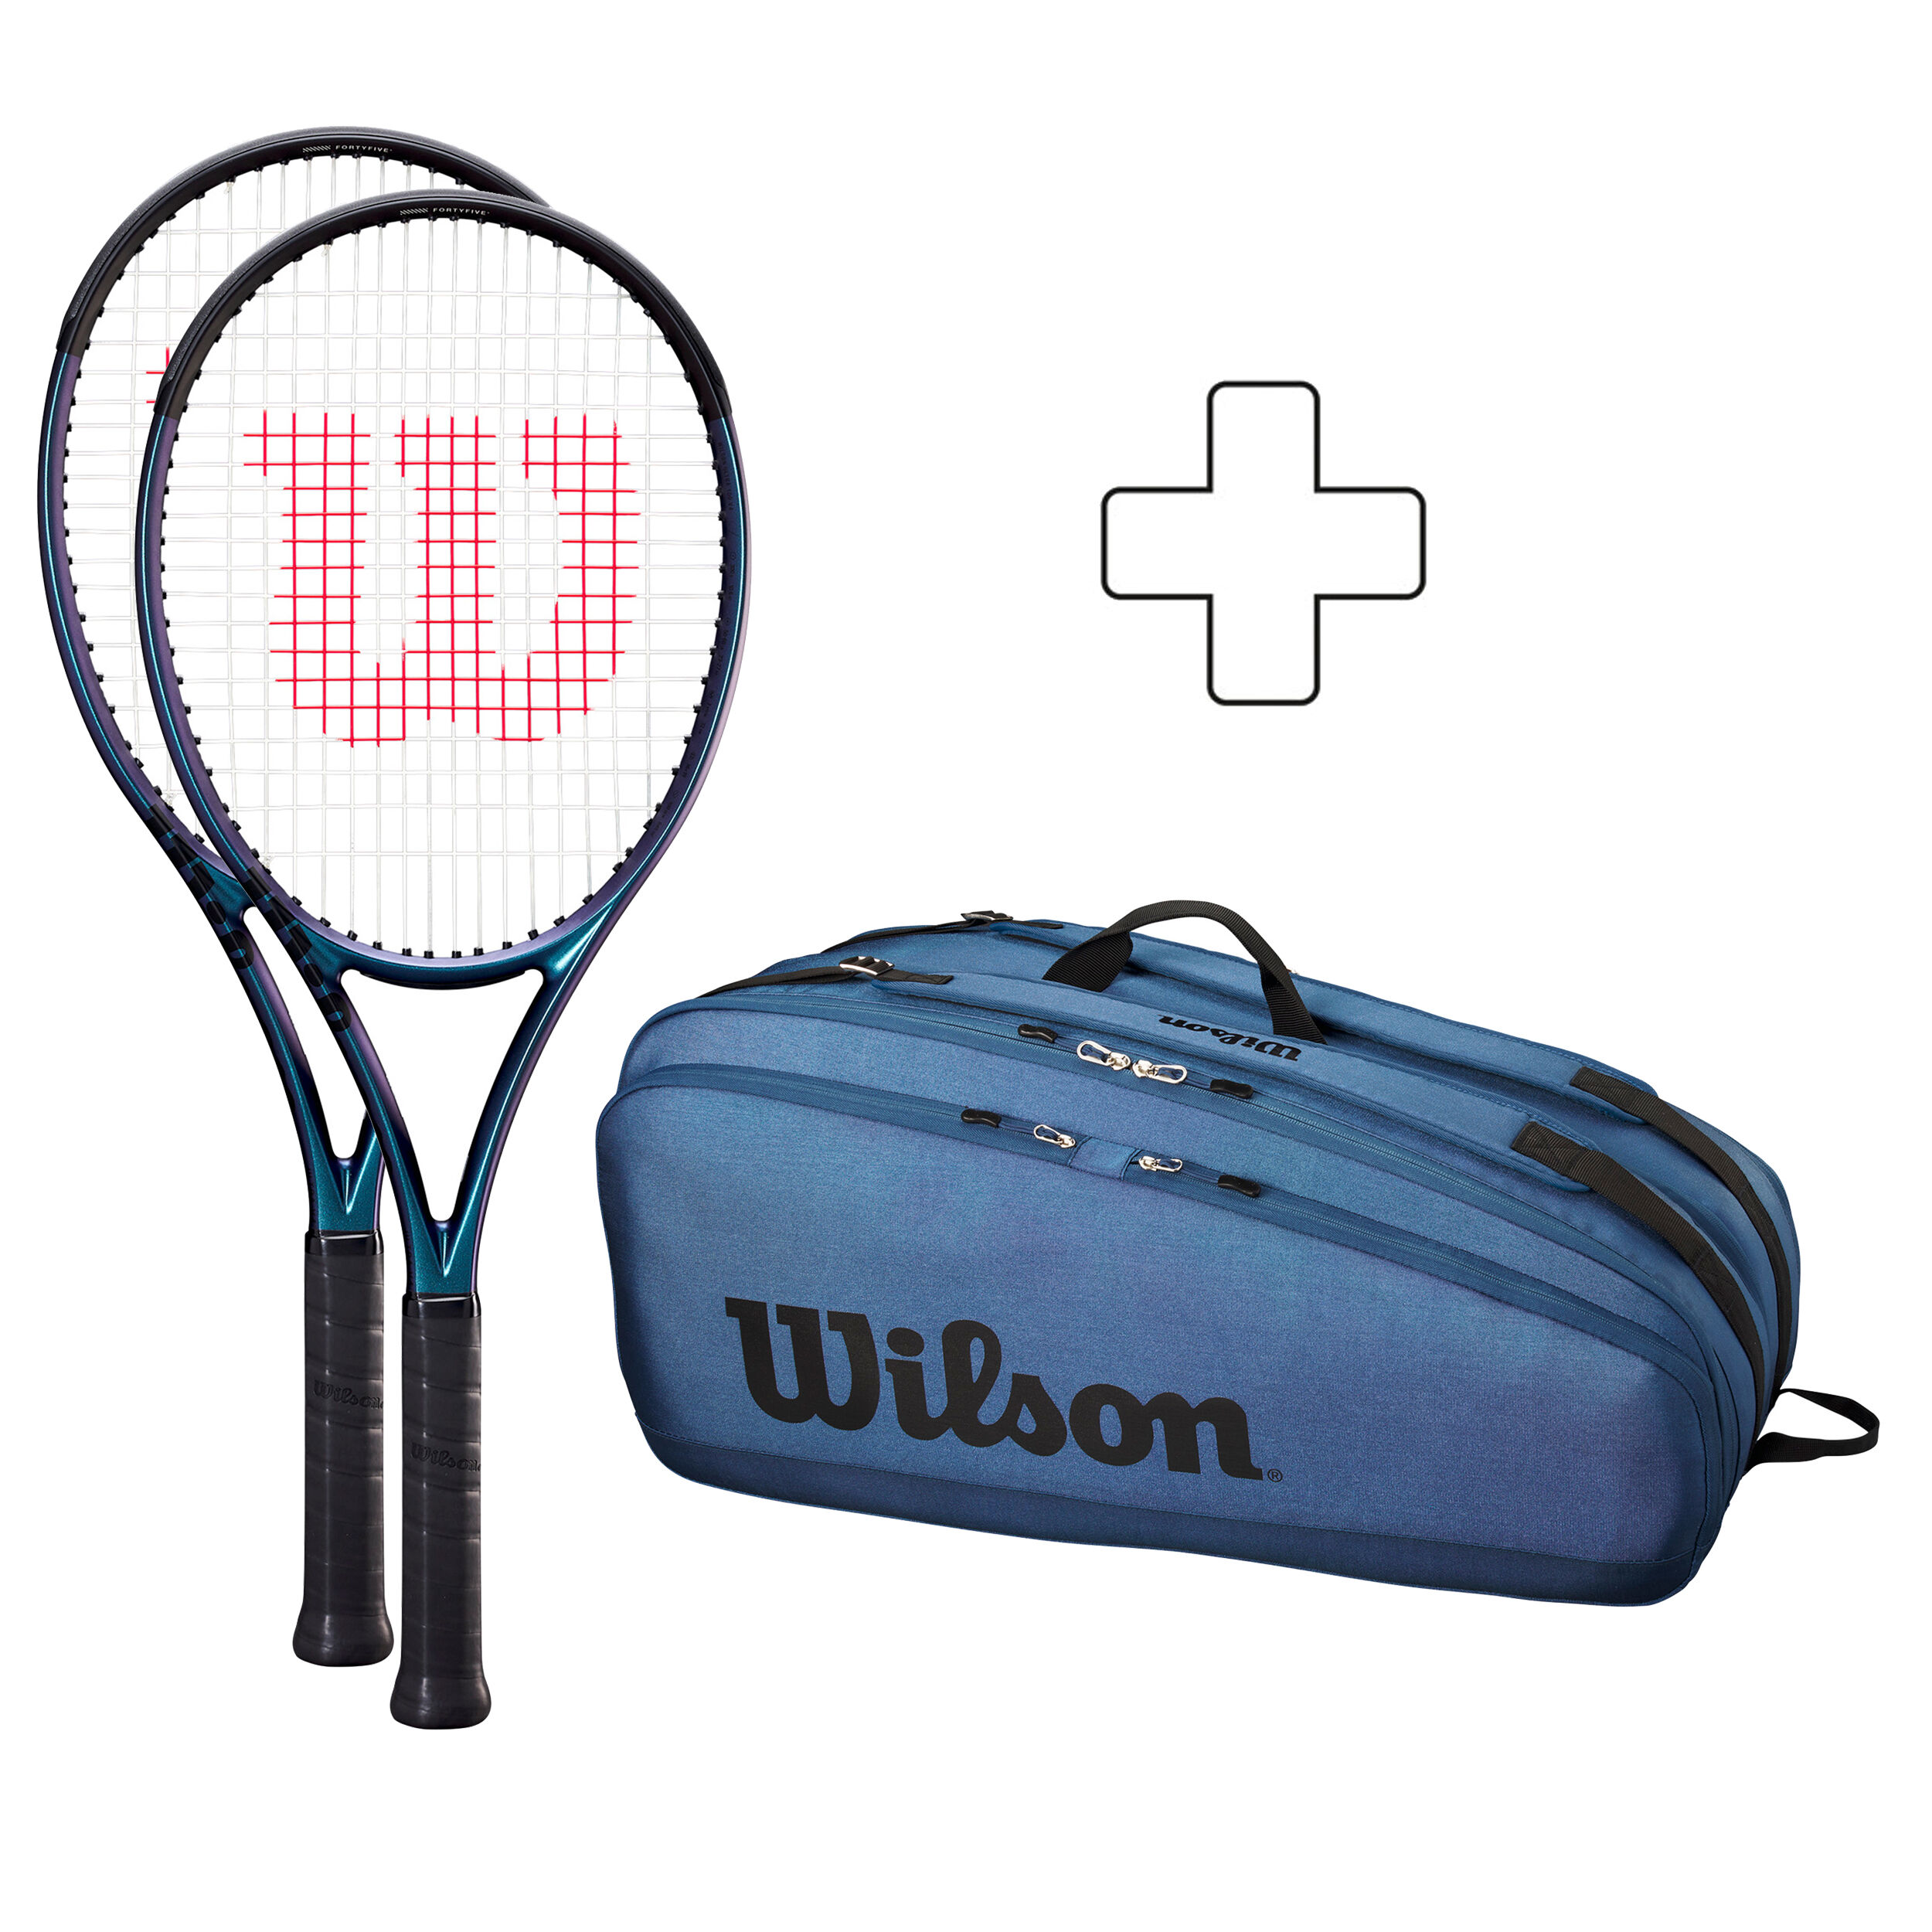 2 X Ultra 100 V4.0 Plus Tennis Bag